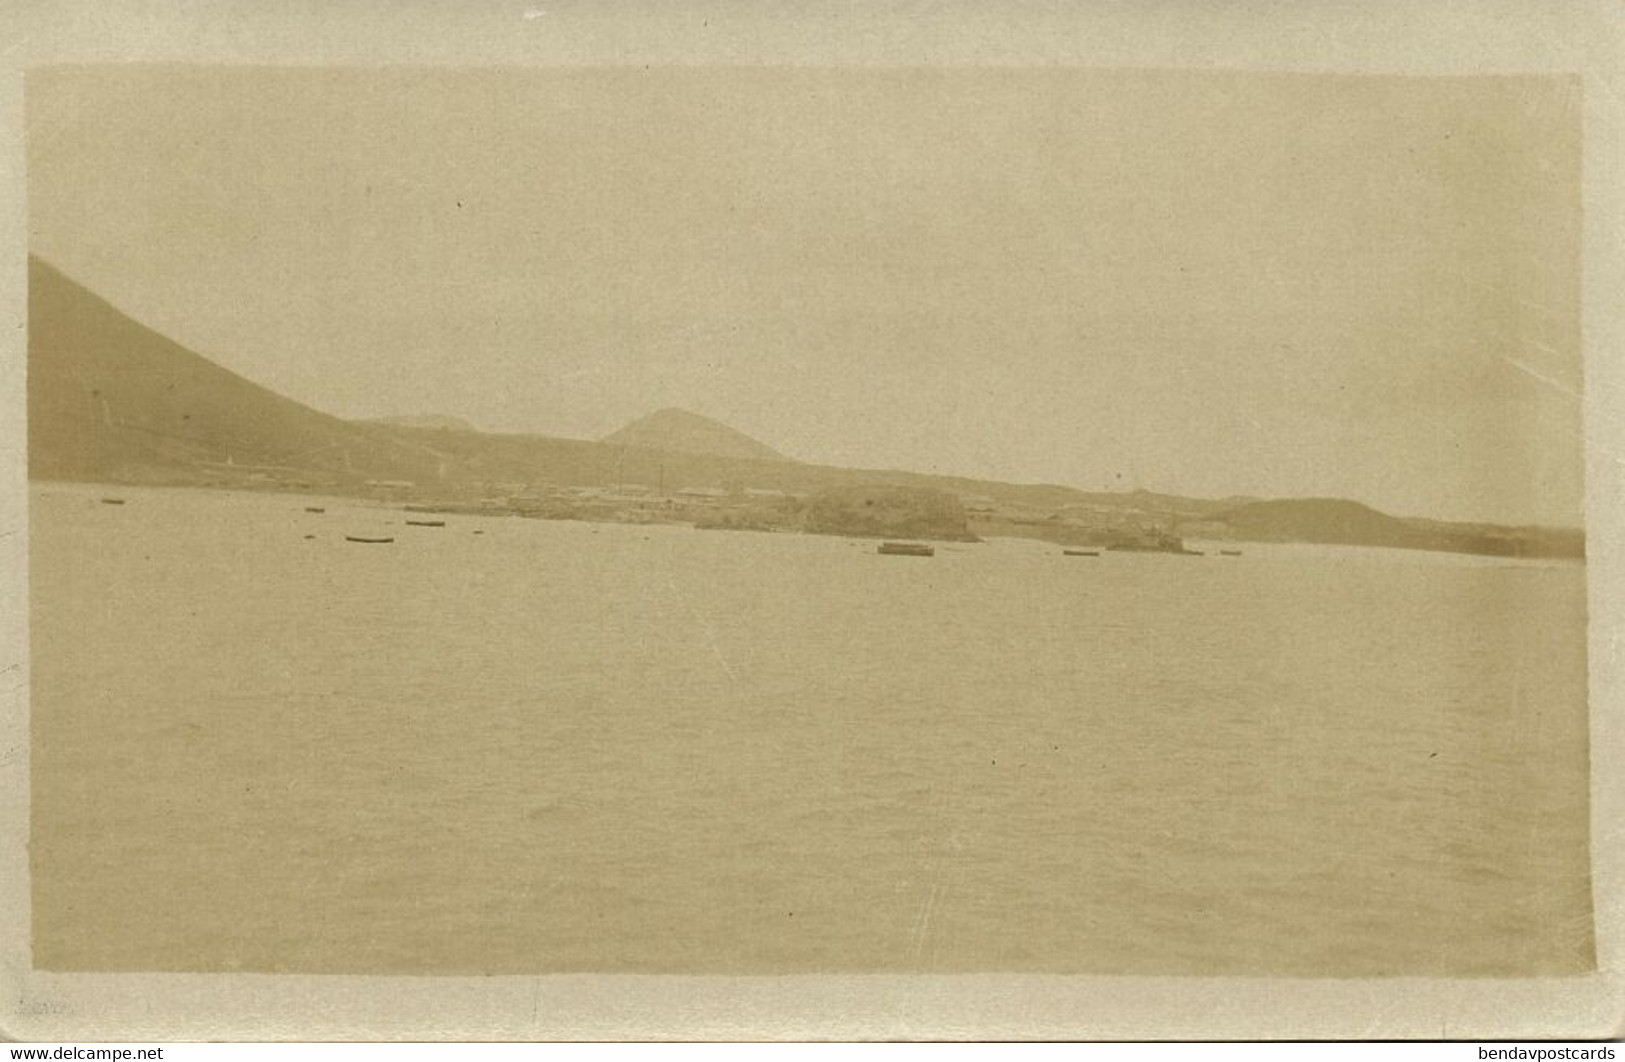 Ascension Island, Panorama From The Sea (1920s) RPPC Postcard - Ascensione